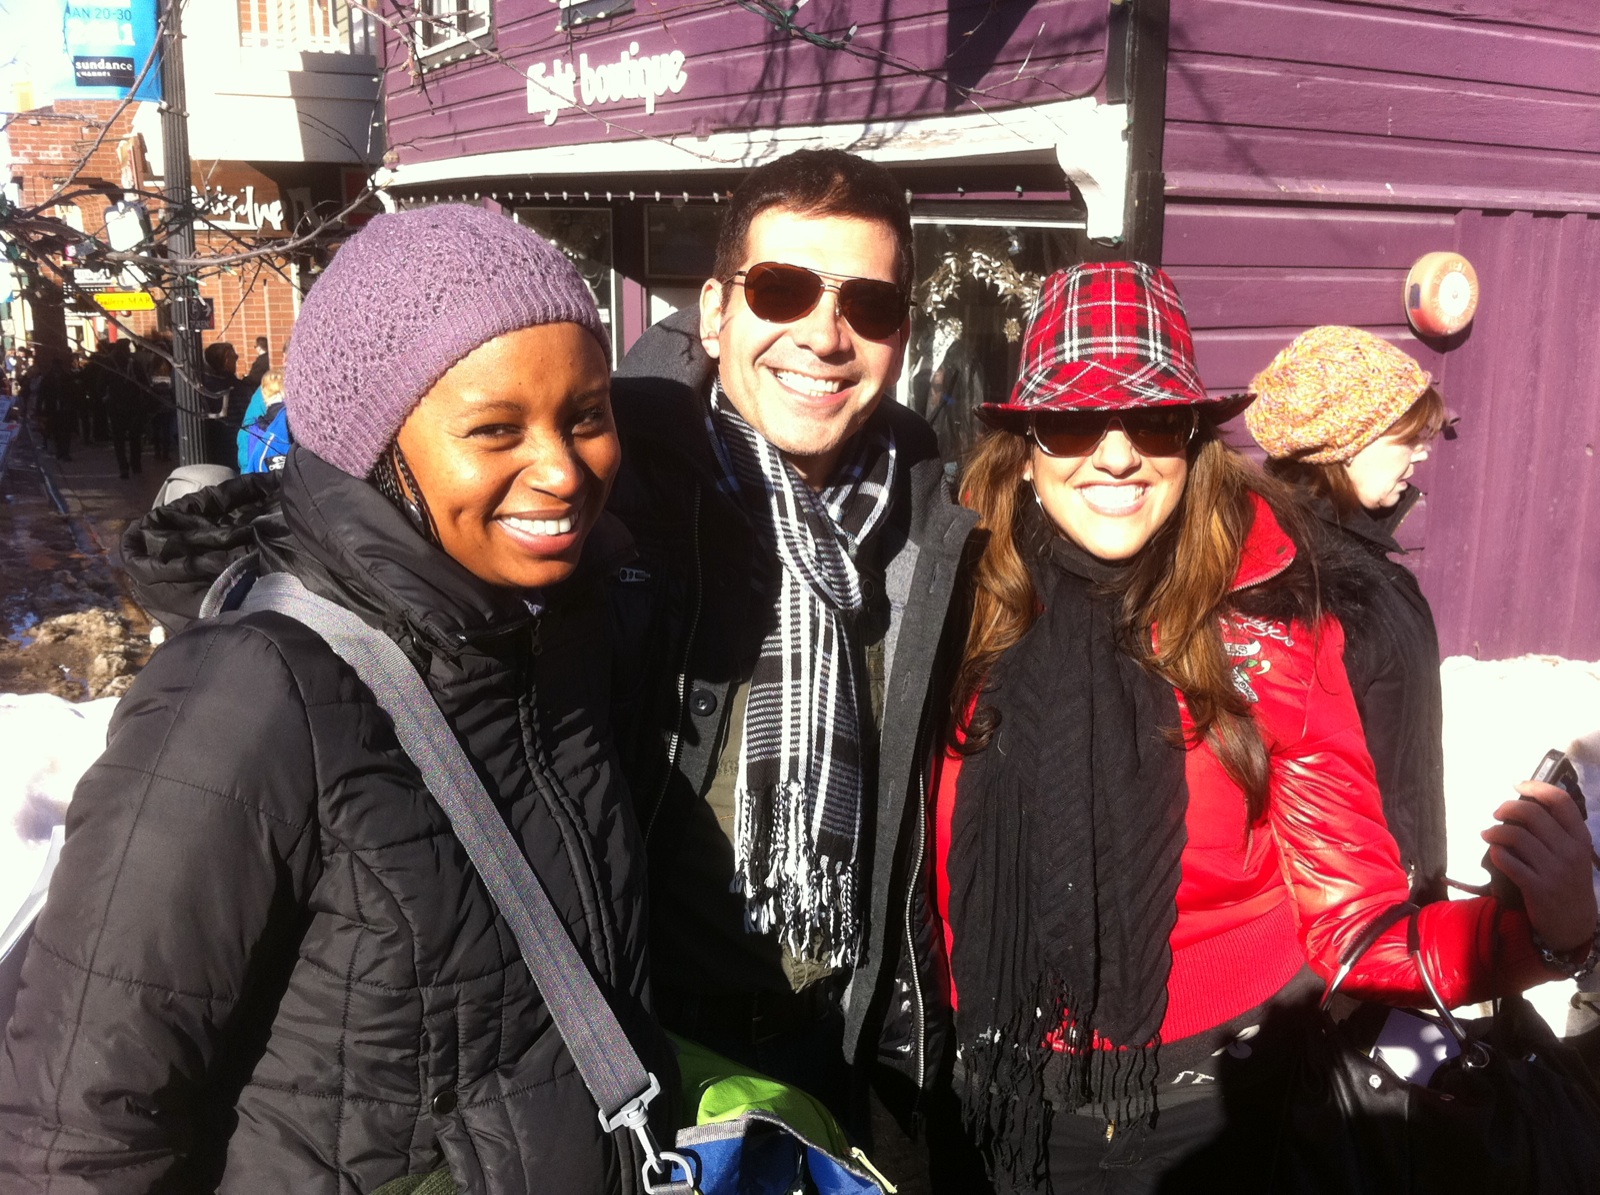 Phyllis Thinkii, Johnny Ray Rodriguez & Maylen Calienes on Main St at the Sundance Film Festival in Park City, UT